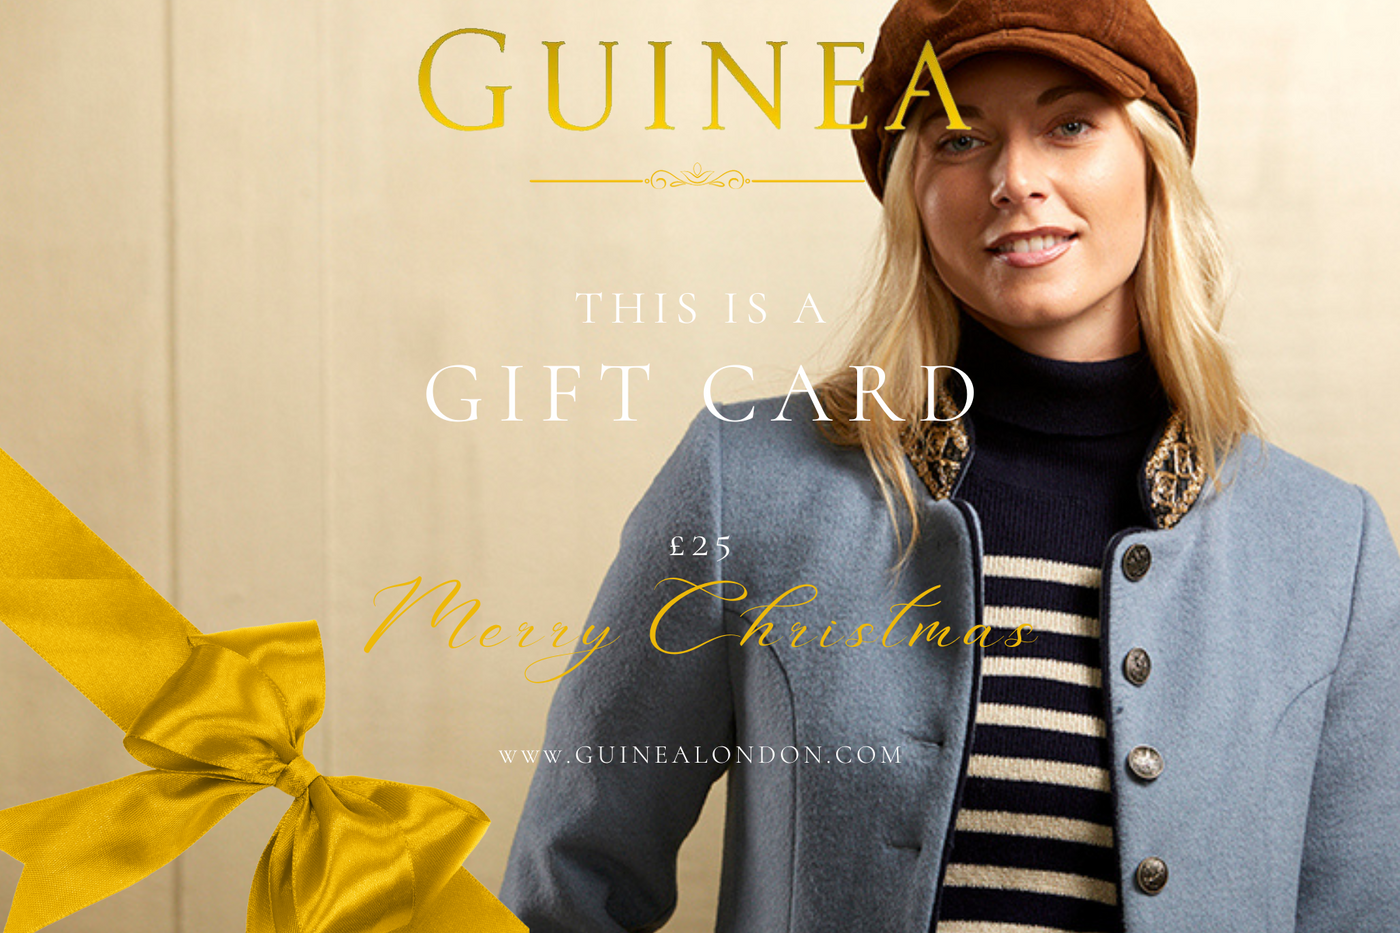 Guinea Gift Card - £25